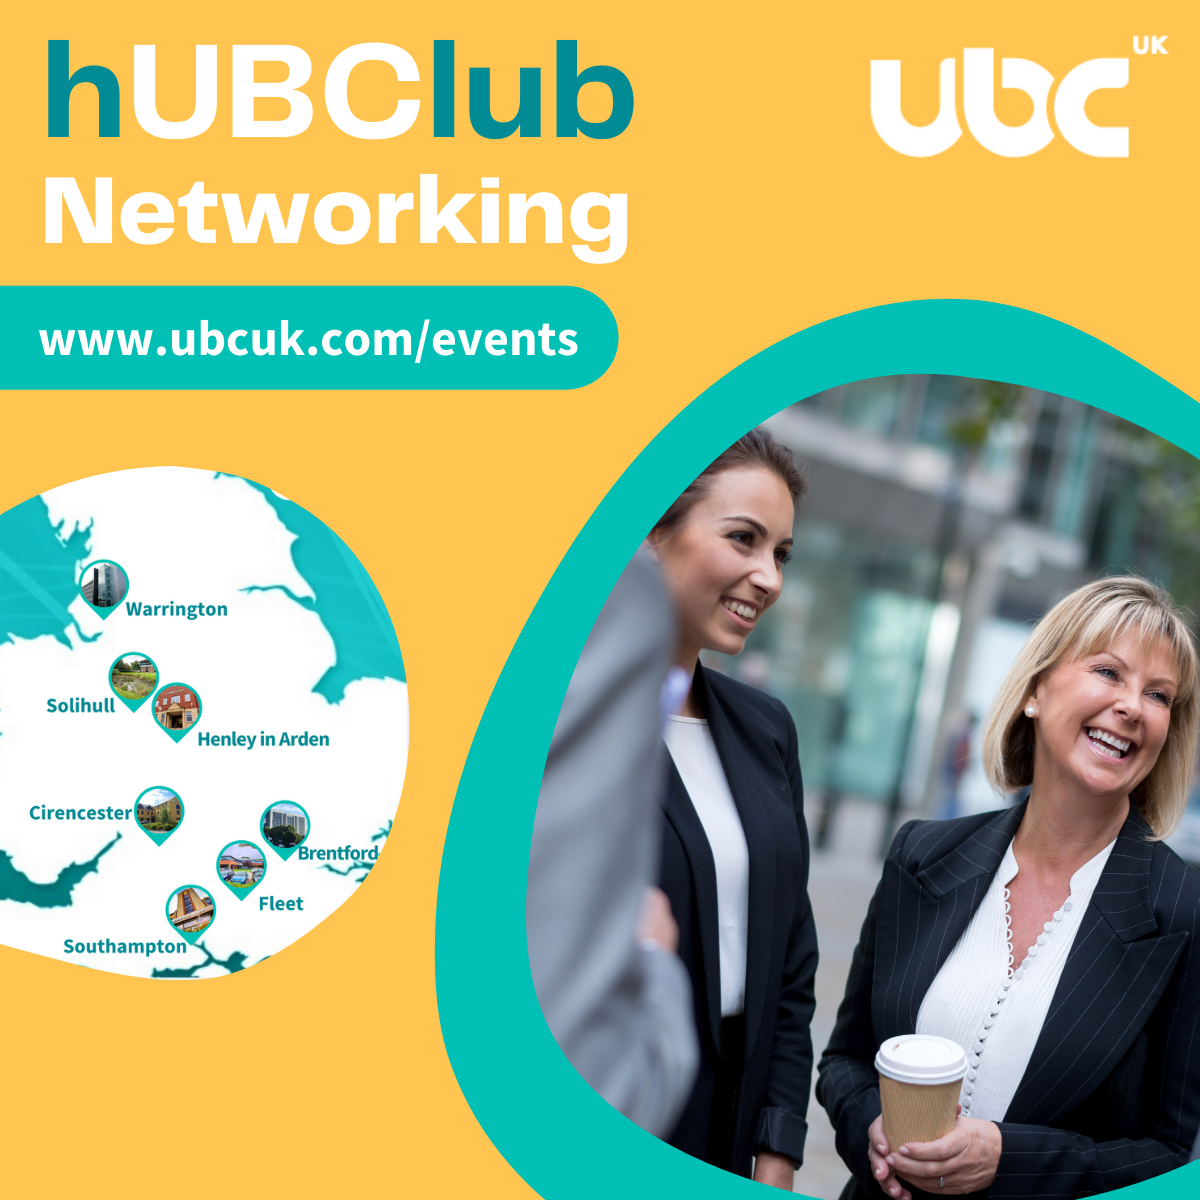 UBCUK - UBCUK : hUBClub Events & Networking